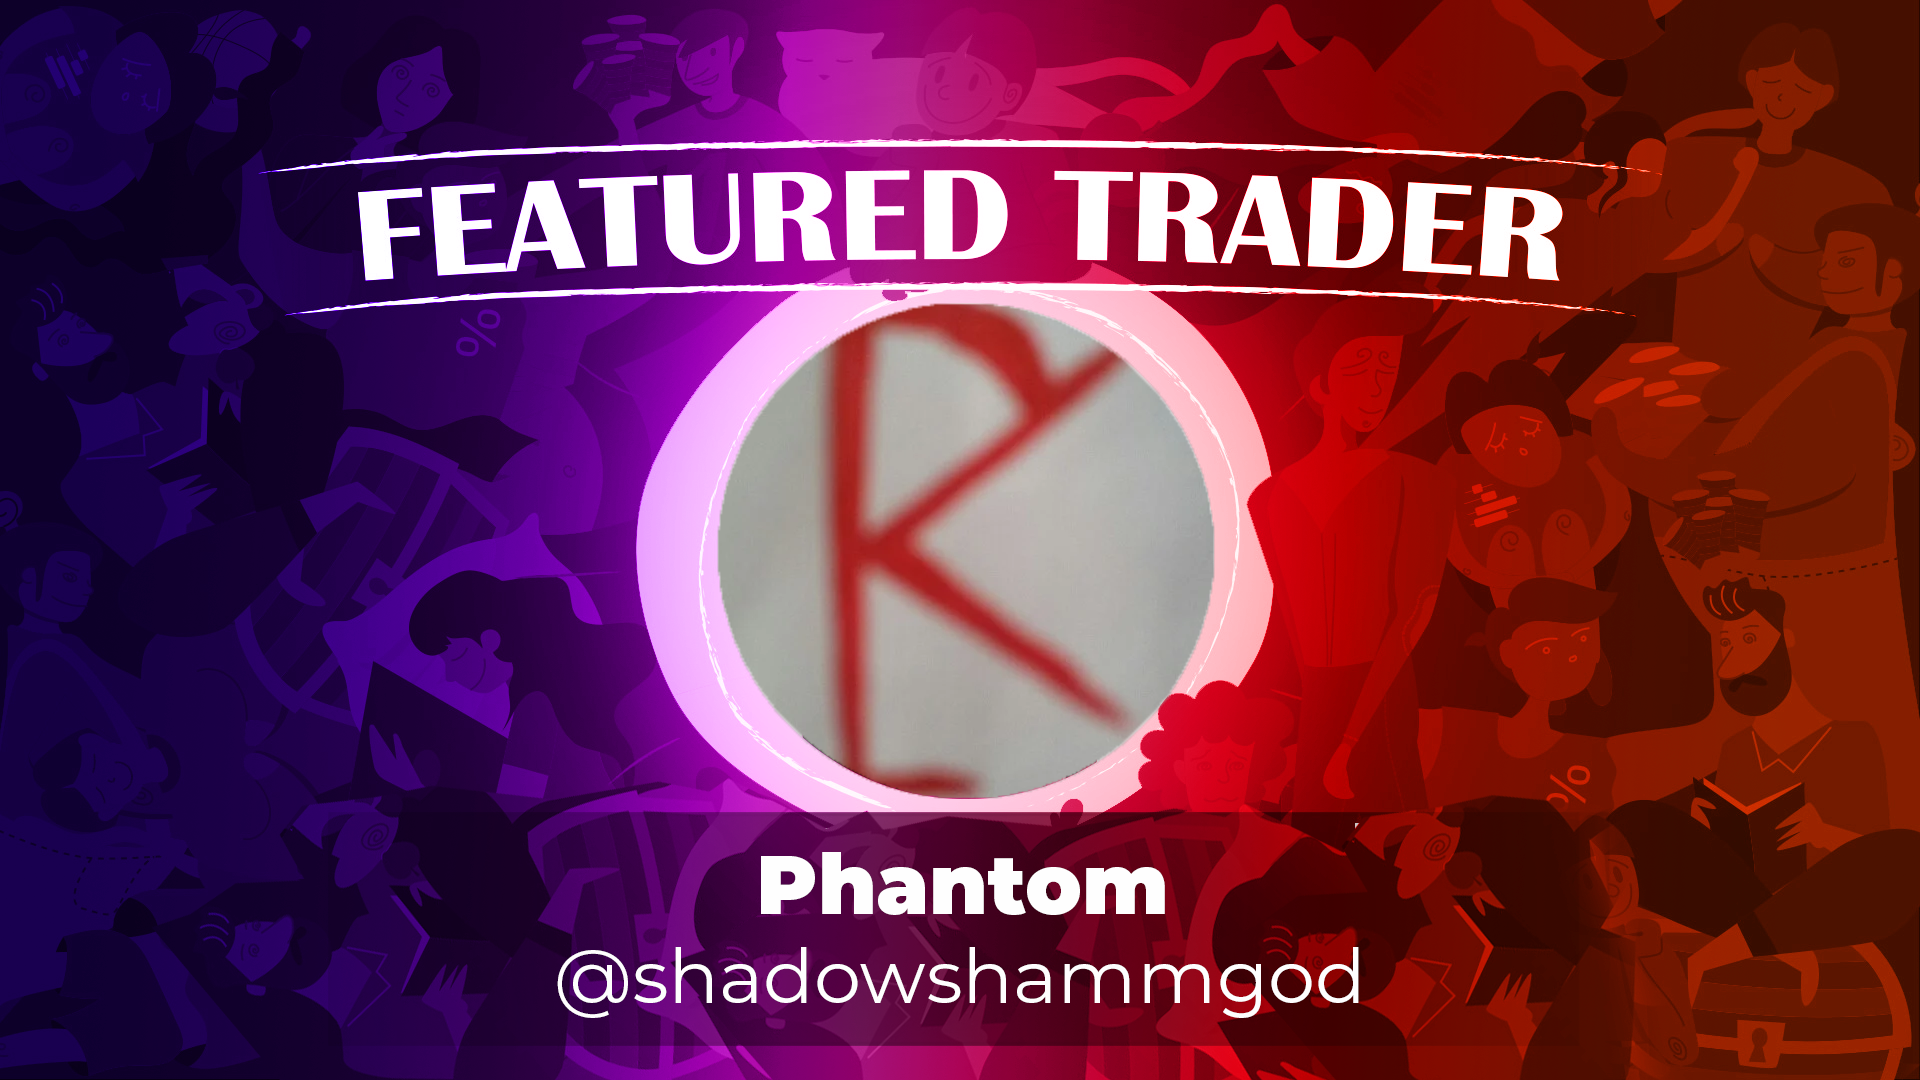 Featured Trader of the Week: @@shadowshammgod